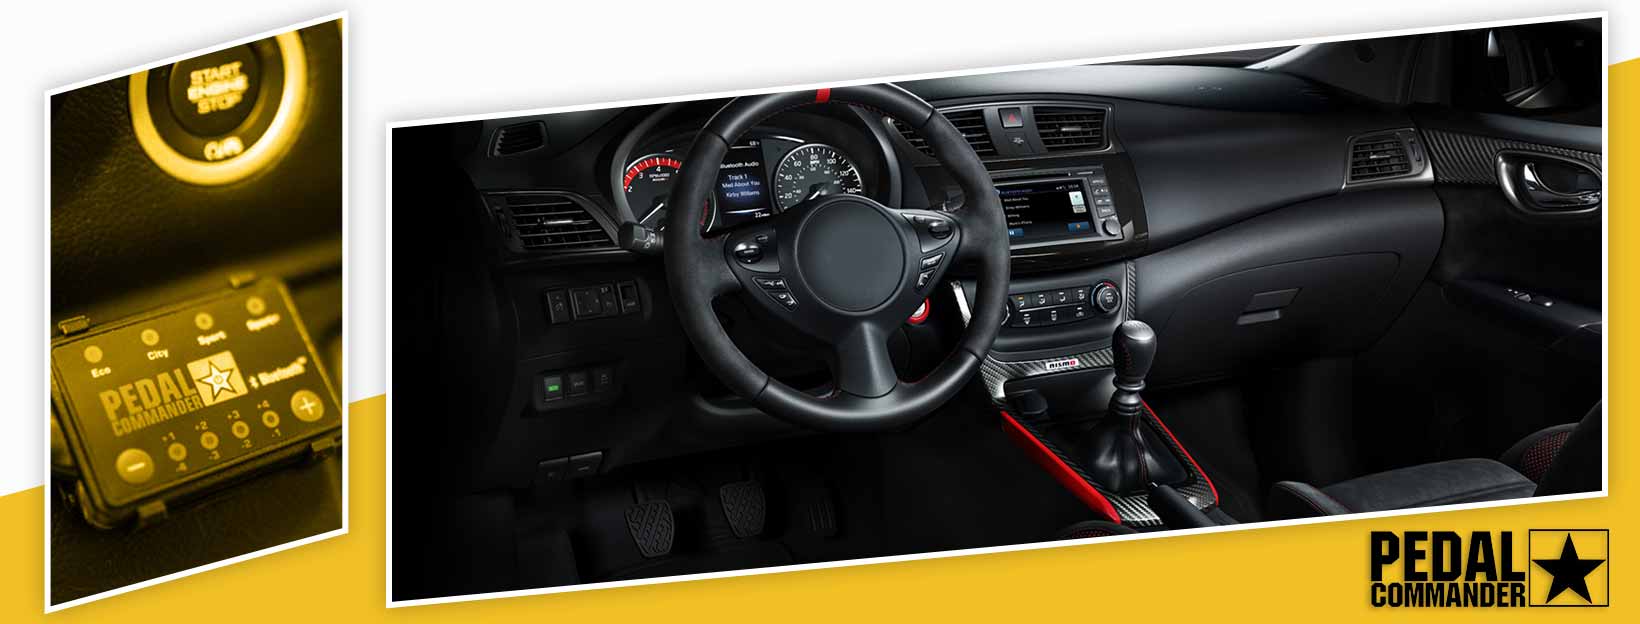 Pedal Commander for Nissan Sentra - interior